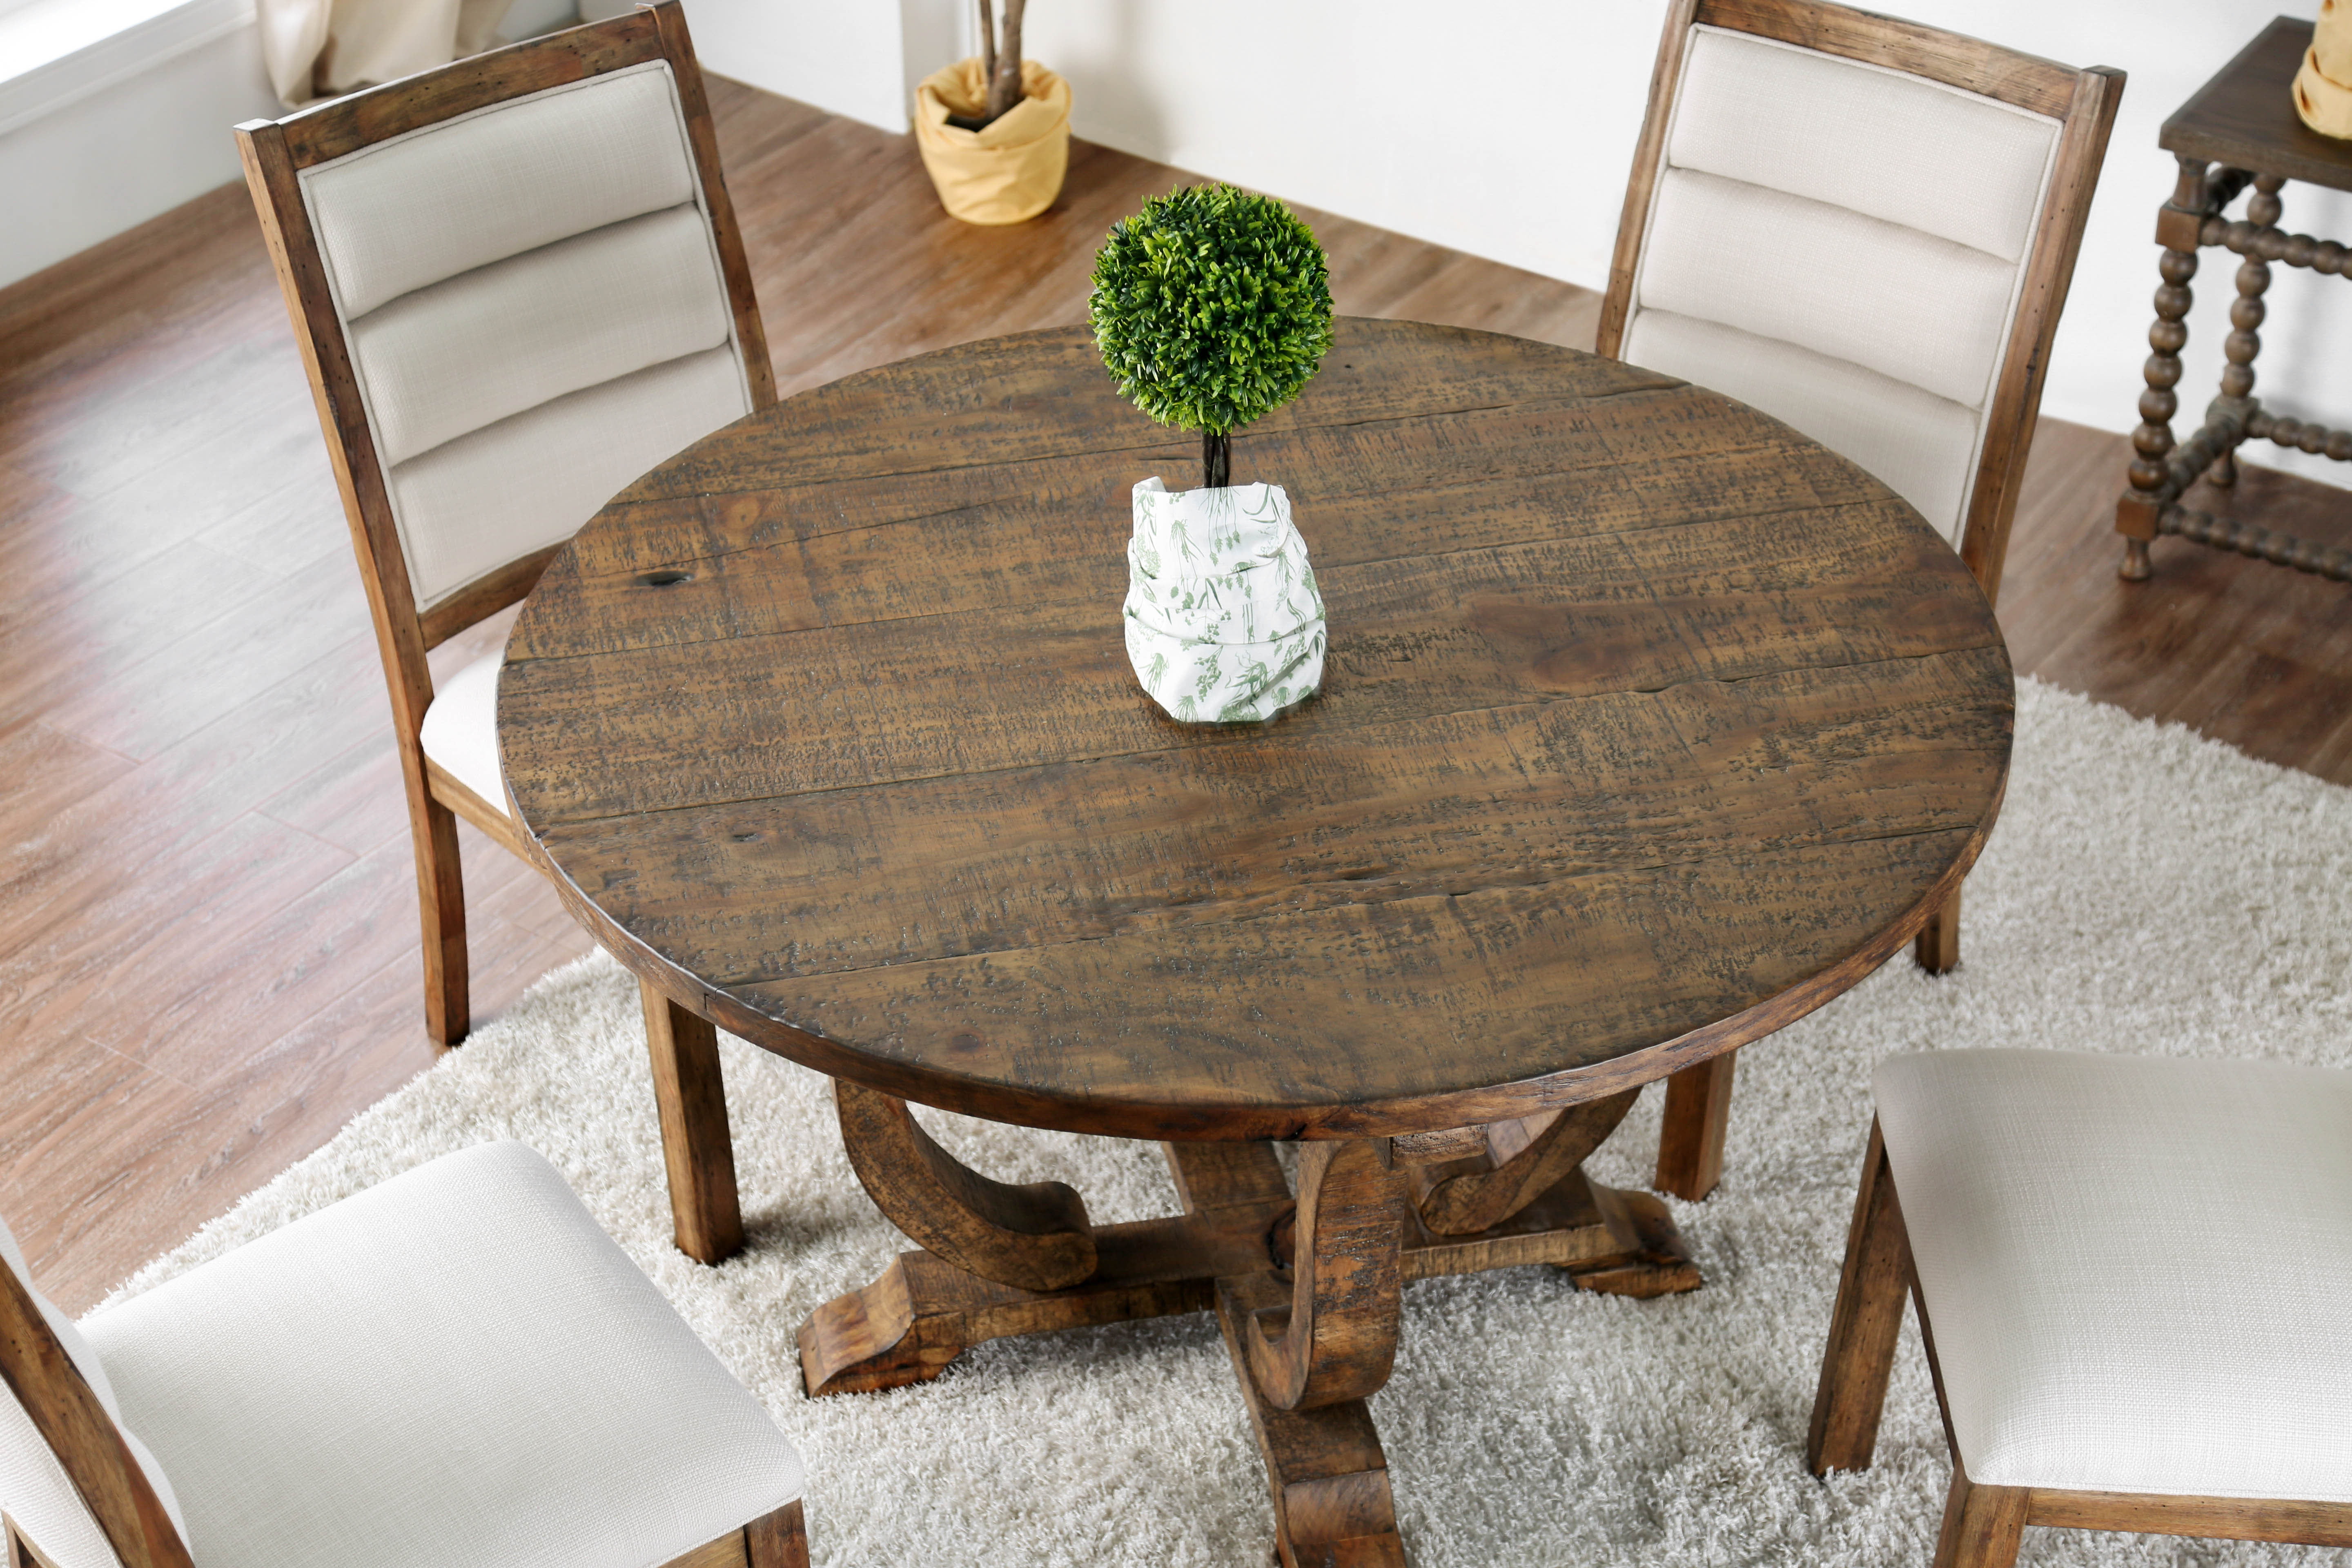  old round wooden kitchen table